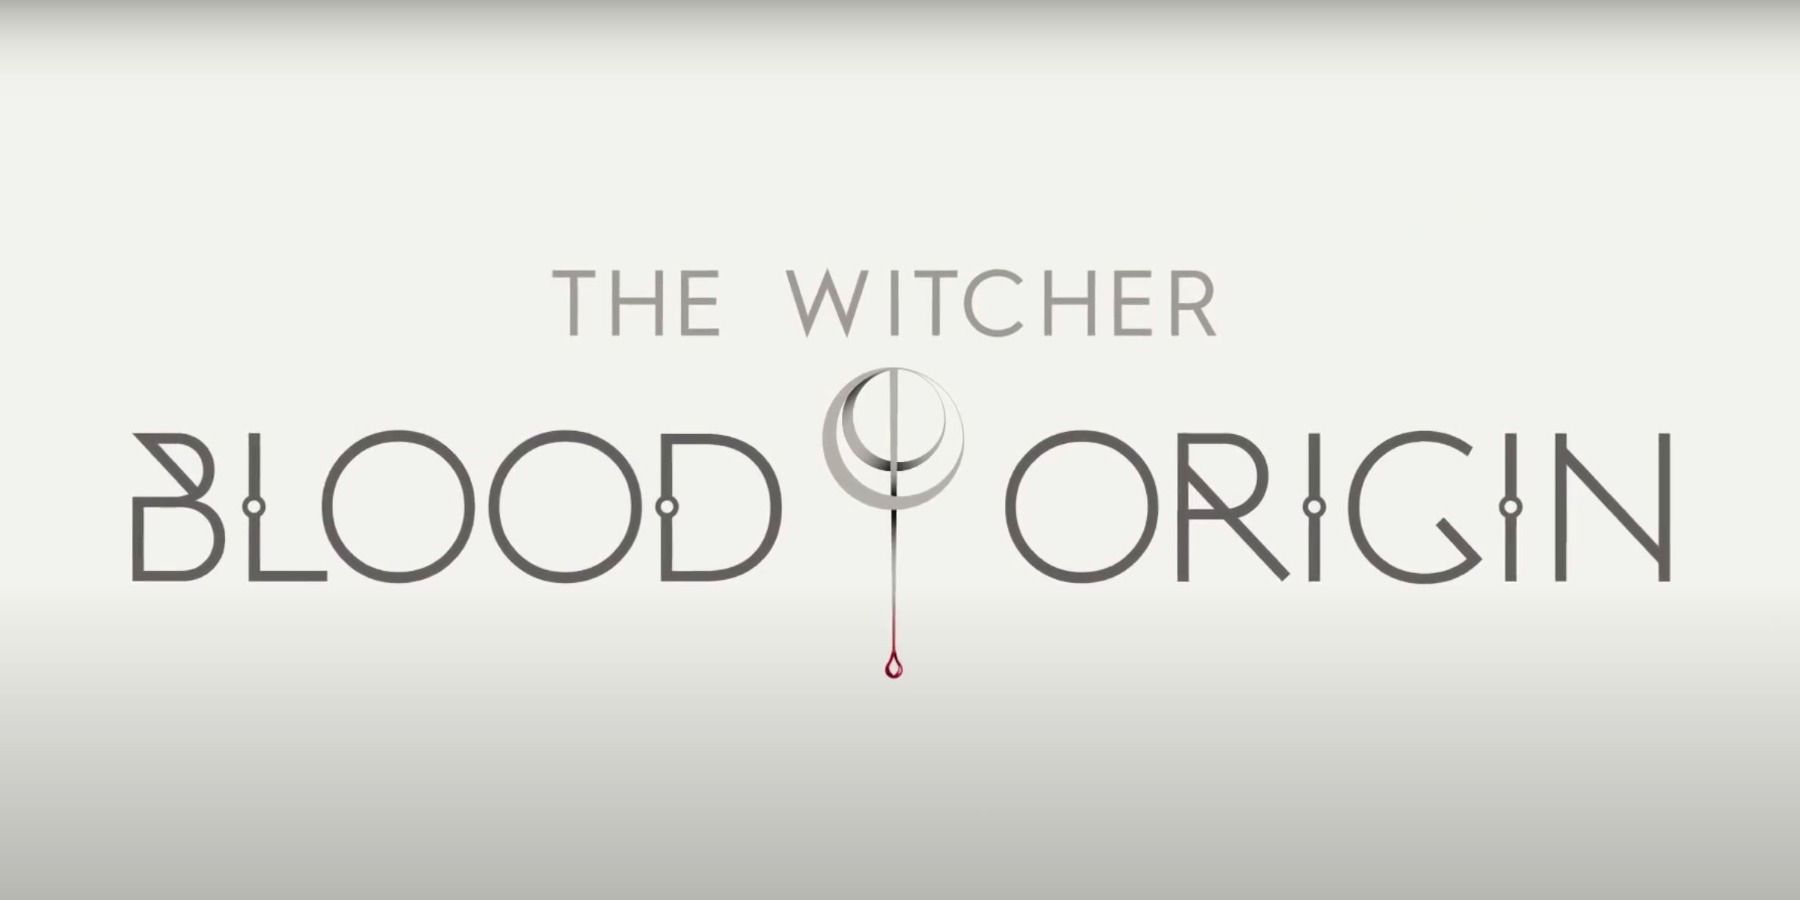 The Witcher : Blood Origin은 BTS에게 Netflix의 Prequel 시리즈를 봅니다.